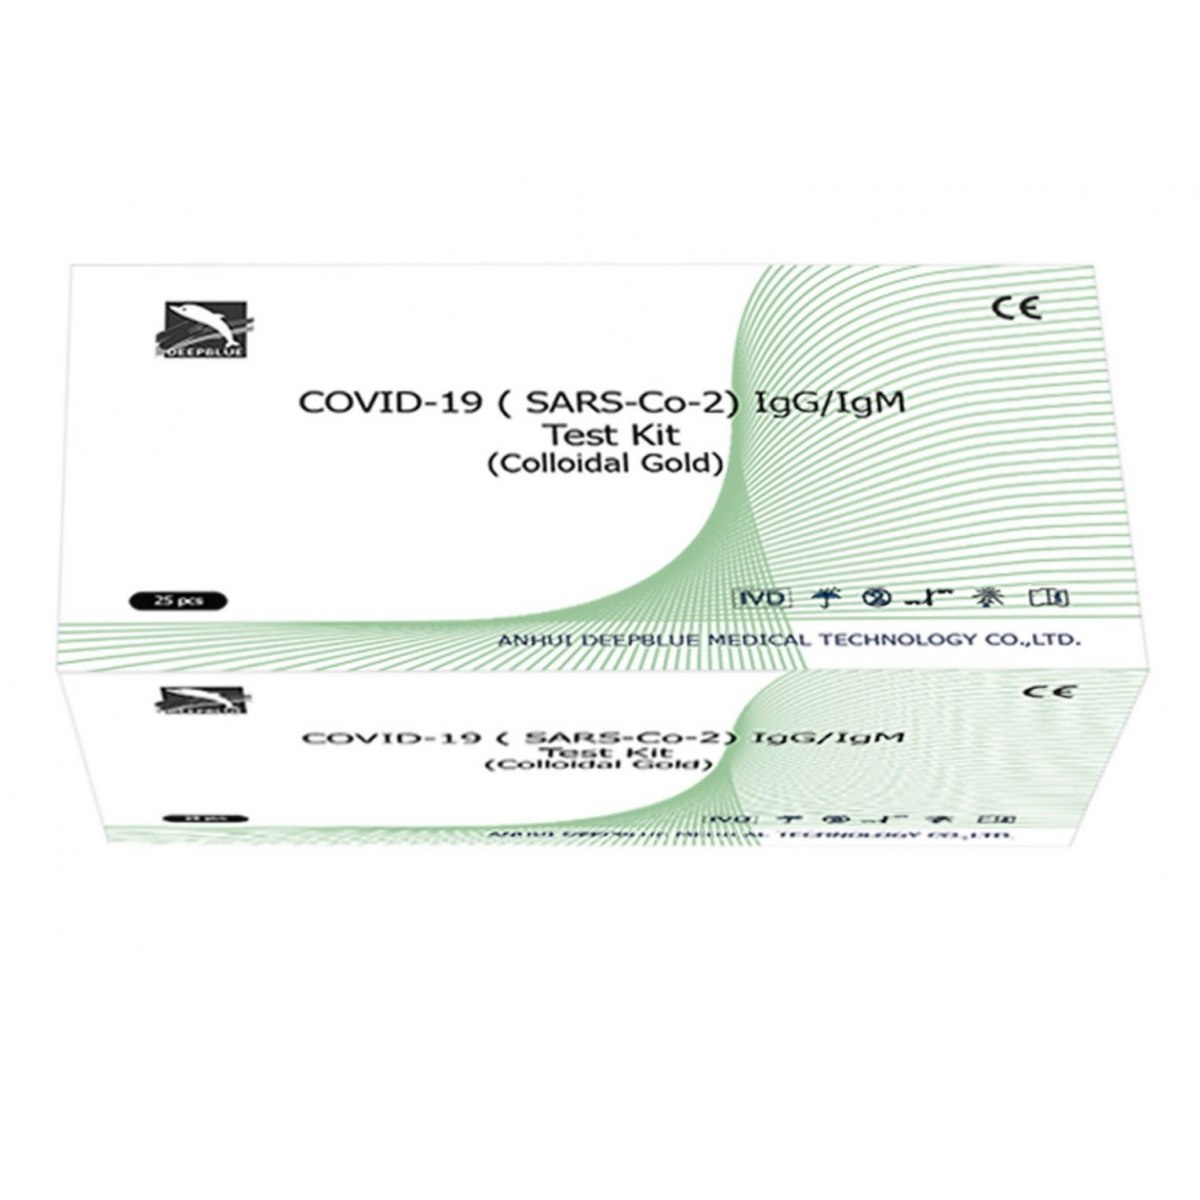 Testy do wykrywania obecności koronawirusa SARS-CoV-2 (COVID-19) Deepblue Covid-19 (SARS-CoV-2) Antigen